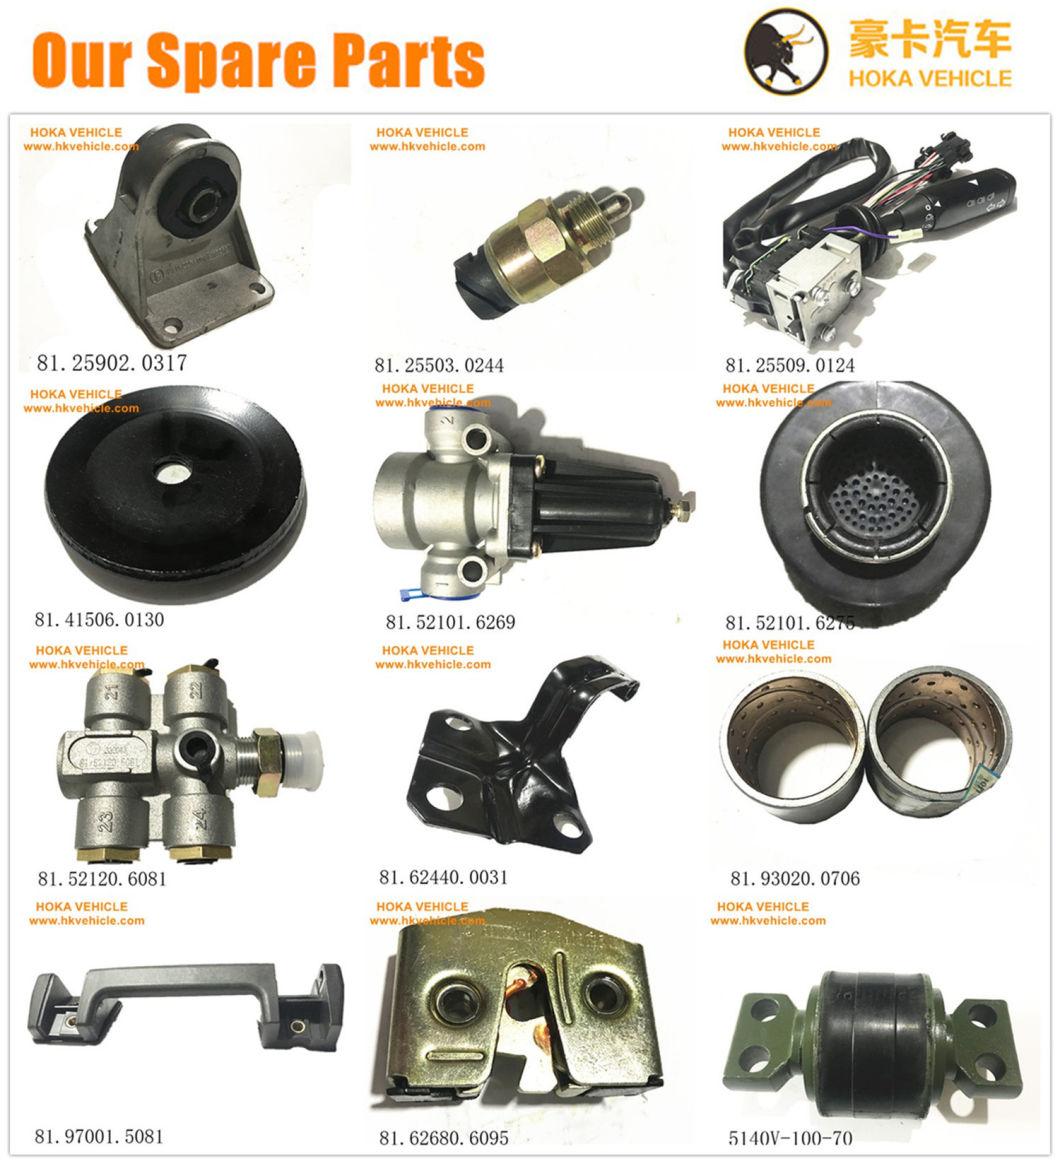 Original Hyva Spare Parts Hydraulic Gear Pump 14571250 for Dump Truck Hoist